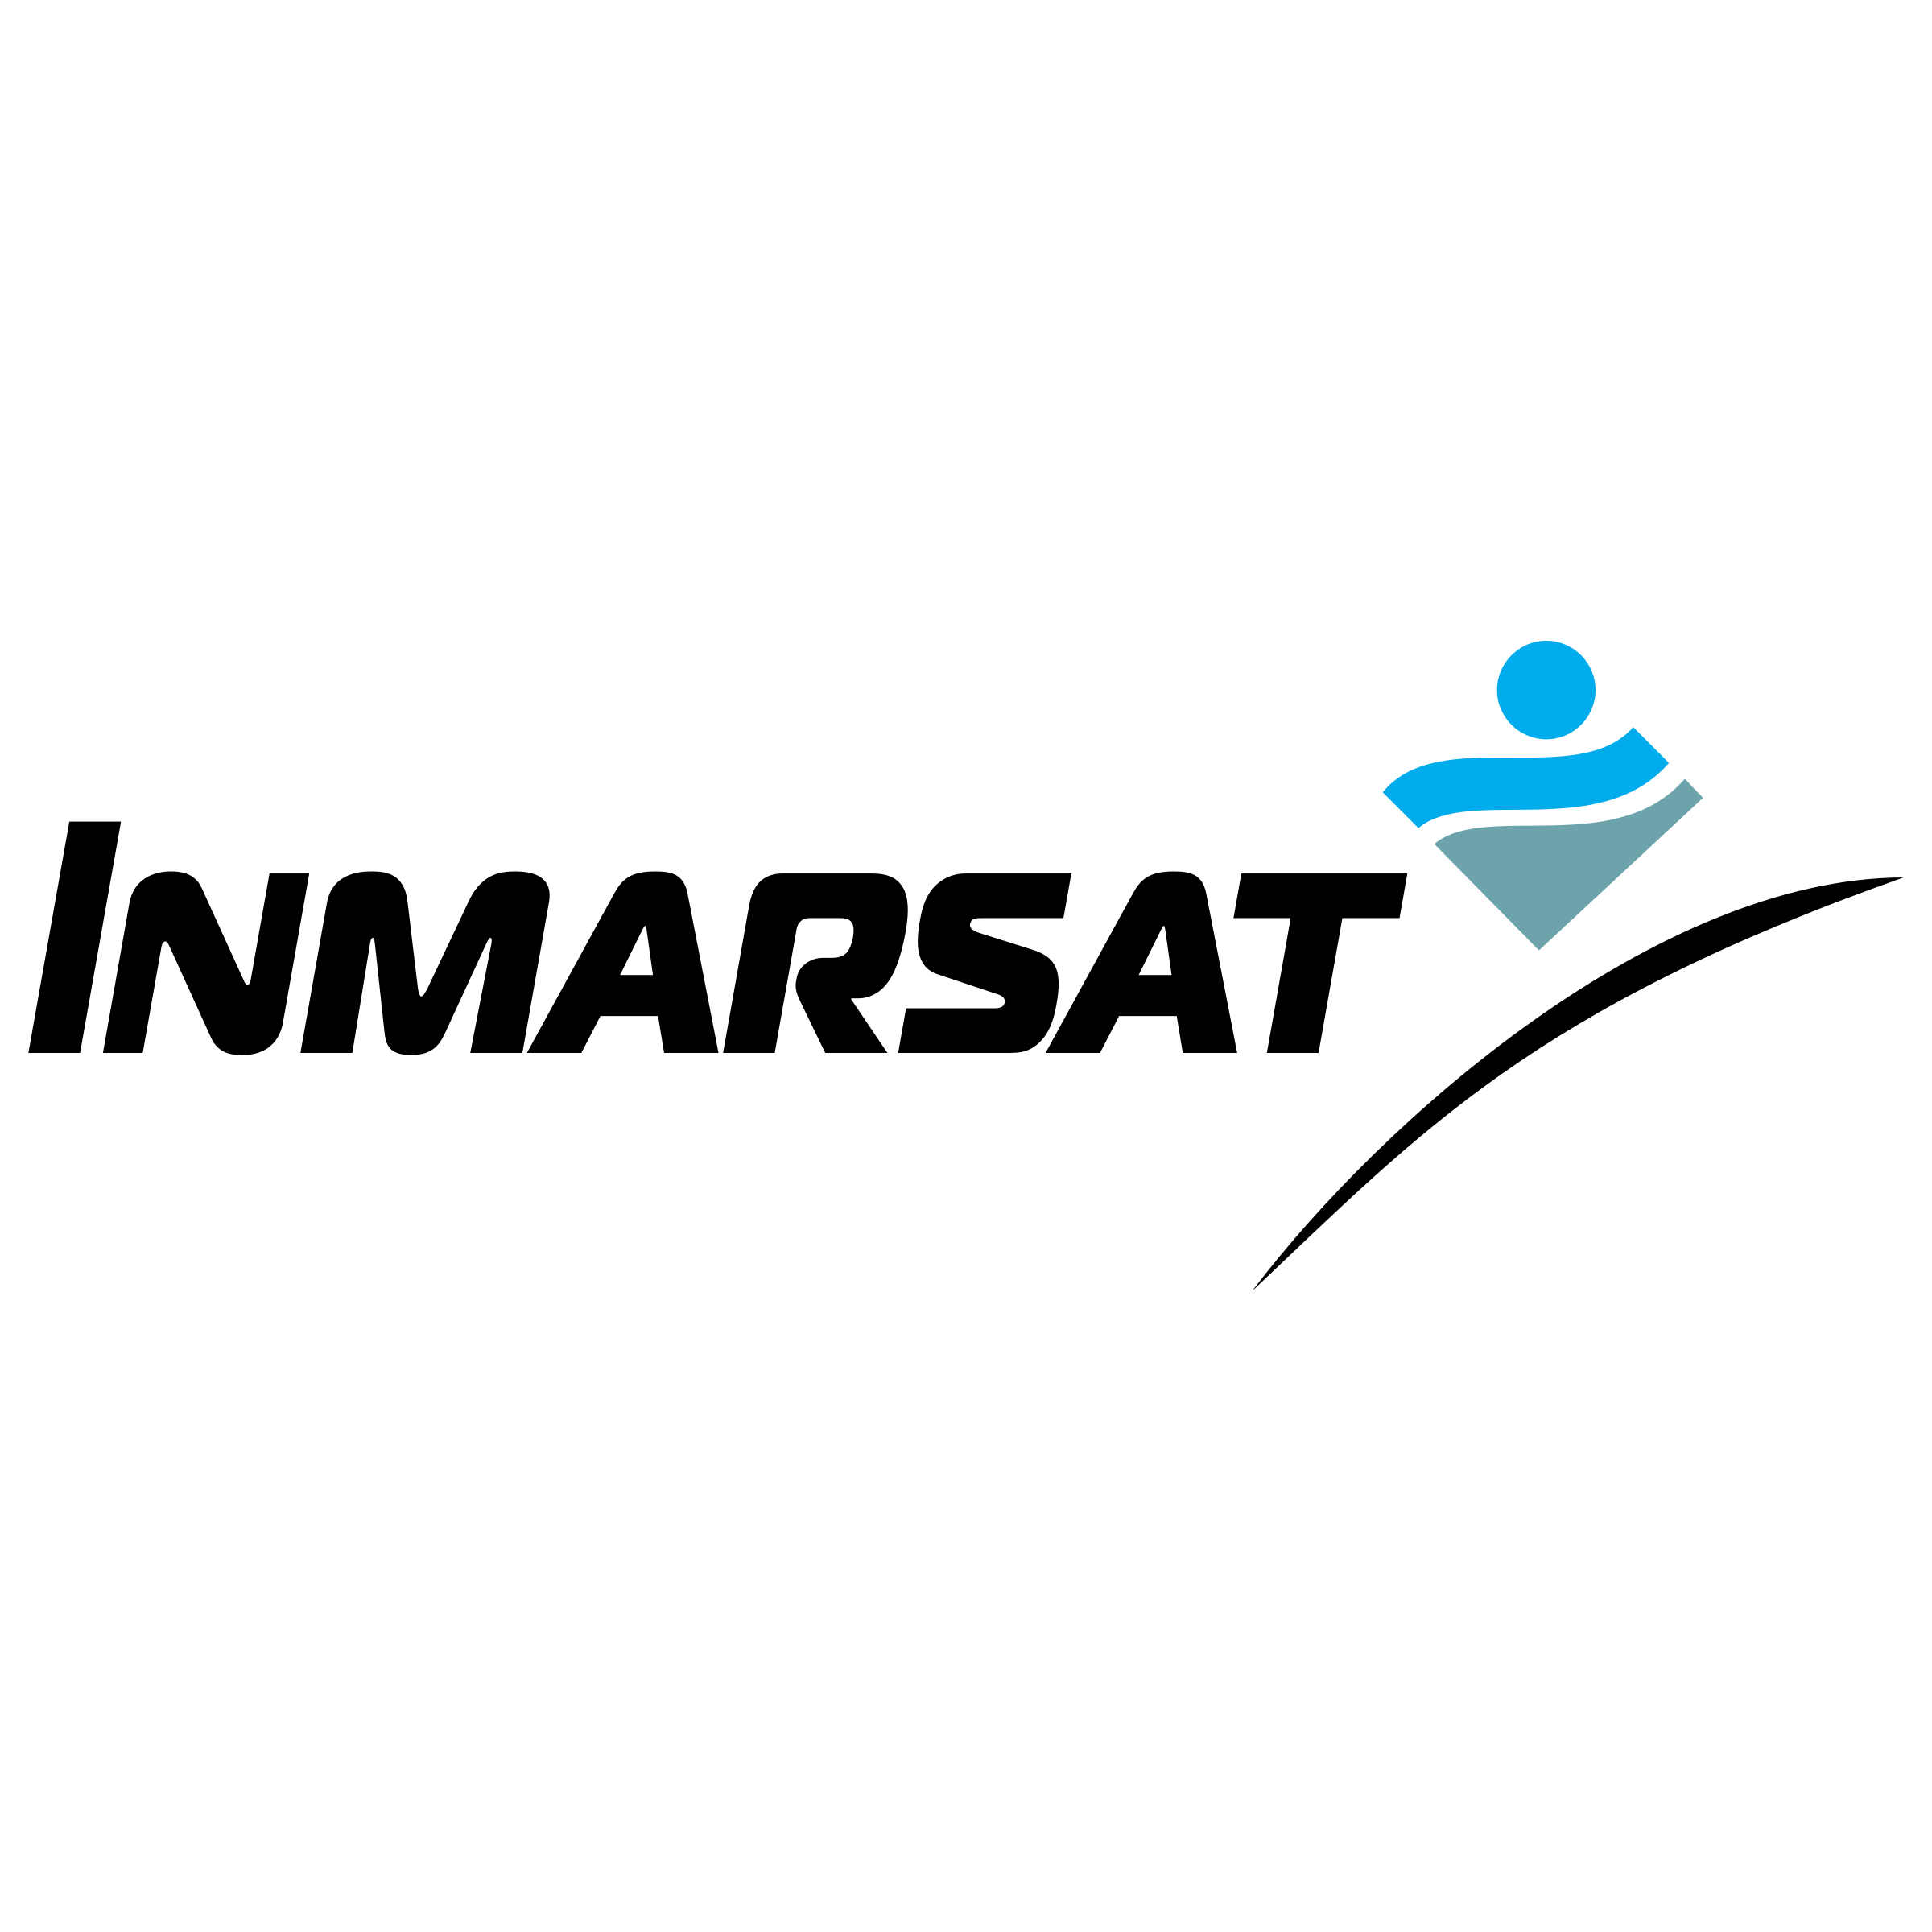 Inmarsat Logo - Inmarsat Logo PNG Transparent & SVG Vector